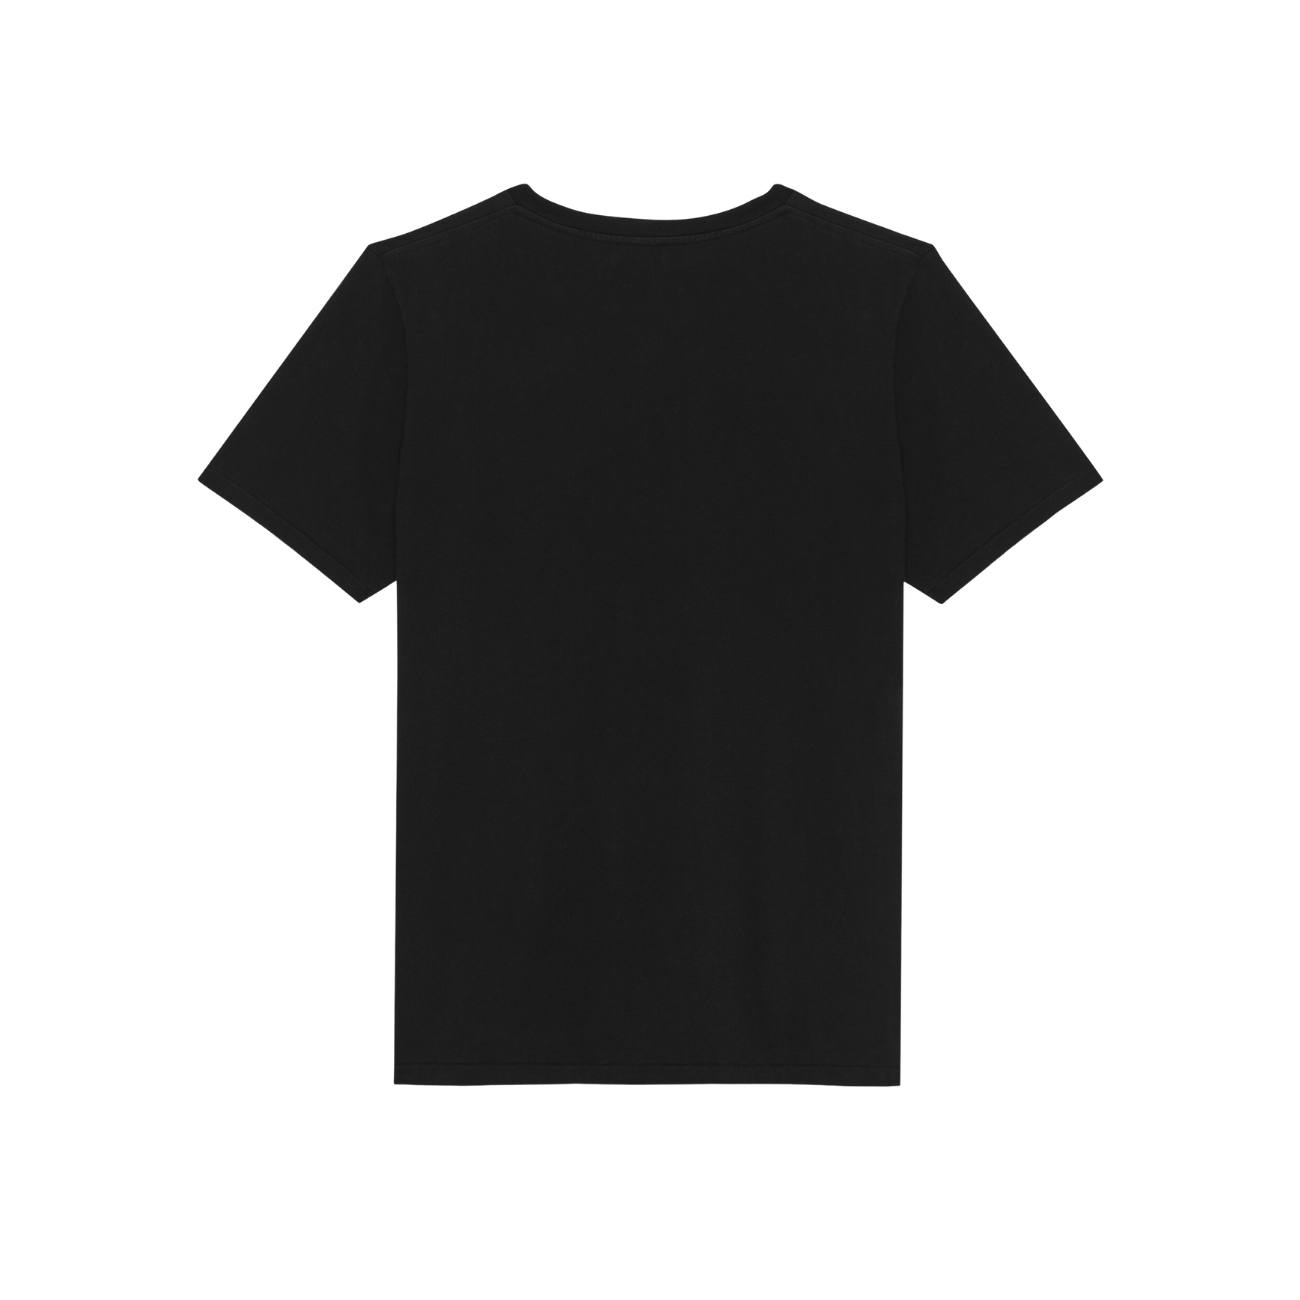 Yves Saint Laurent Rive Gauche Men's T-Shirt